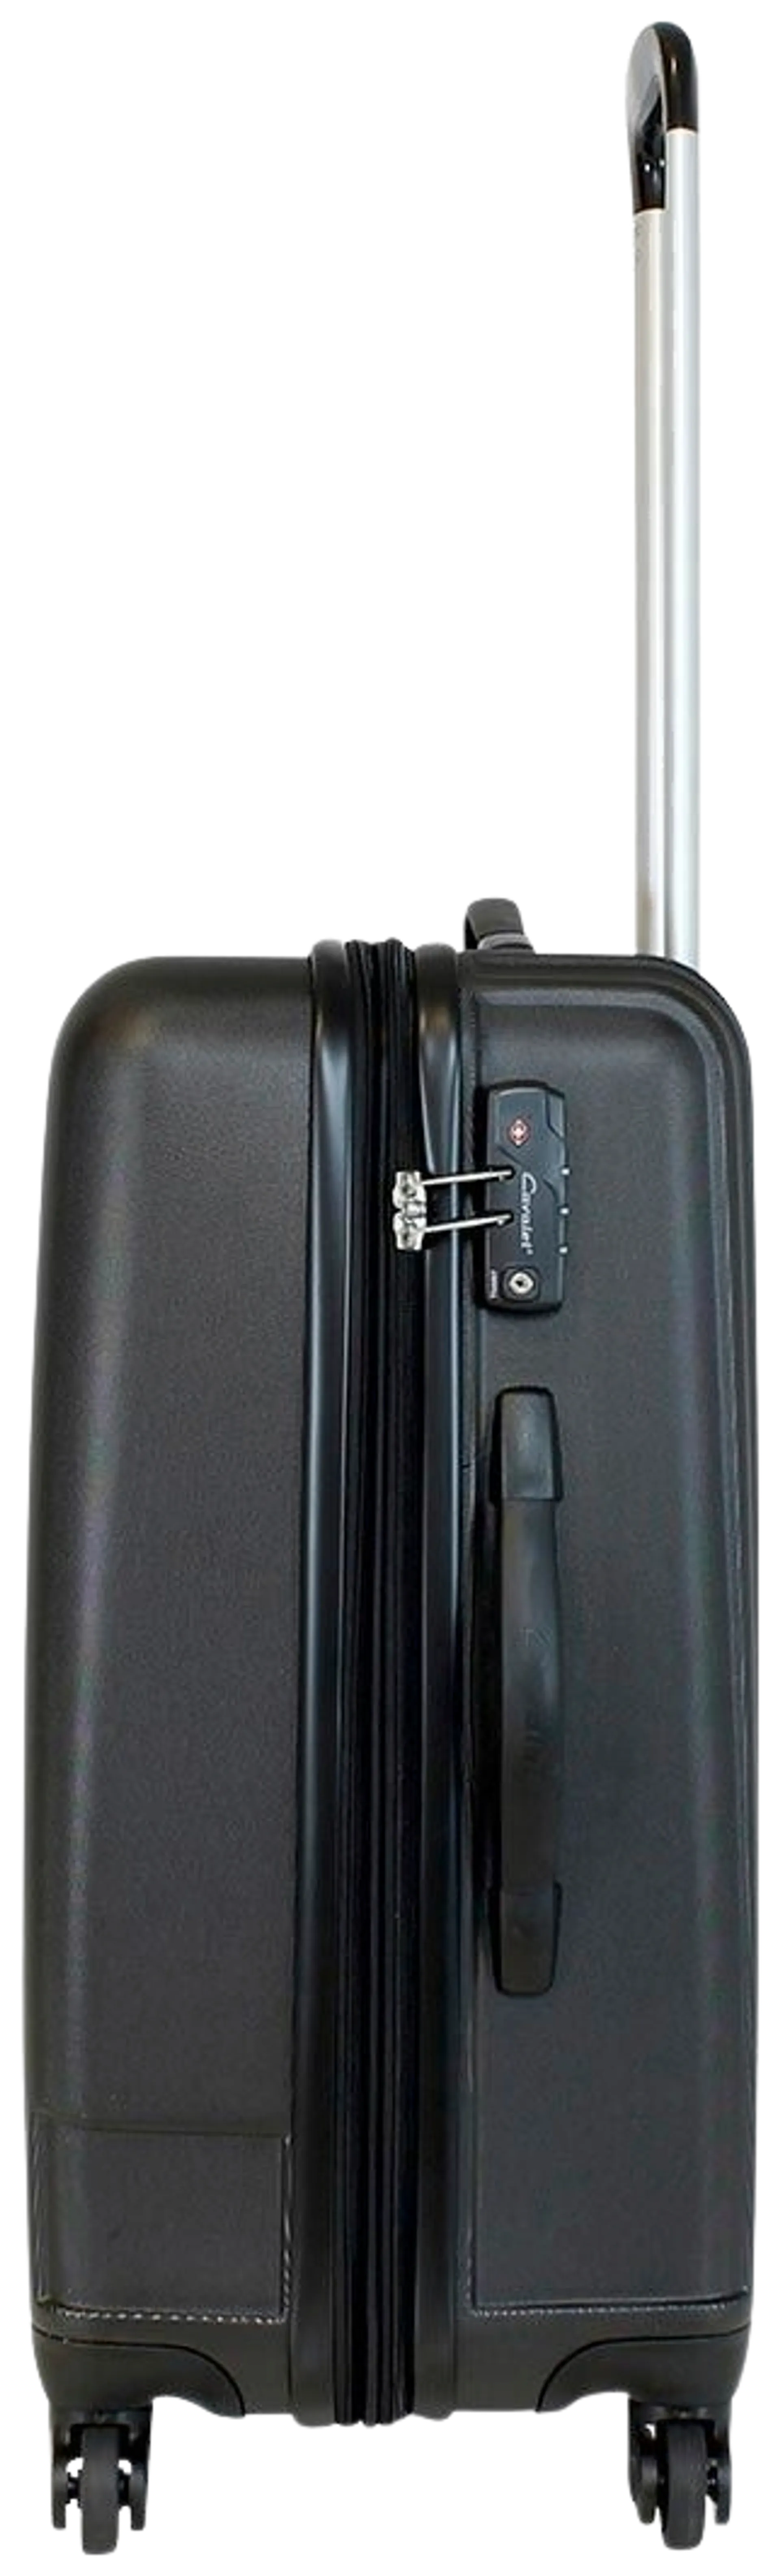 Cavalet Malibu matkalaukku L 73 cm, musta - 4